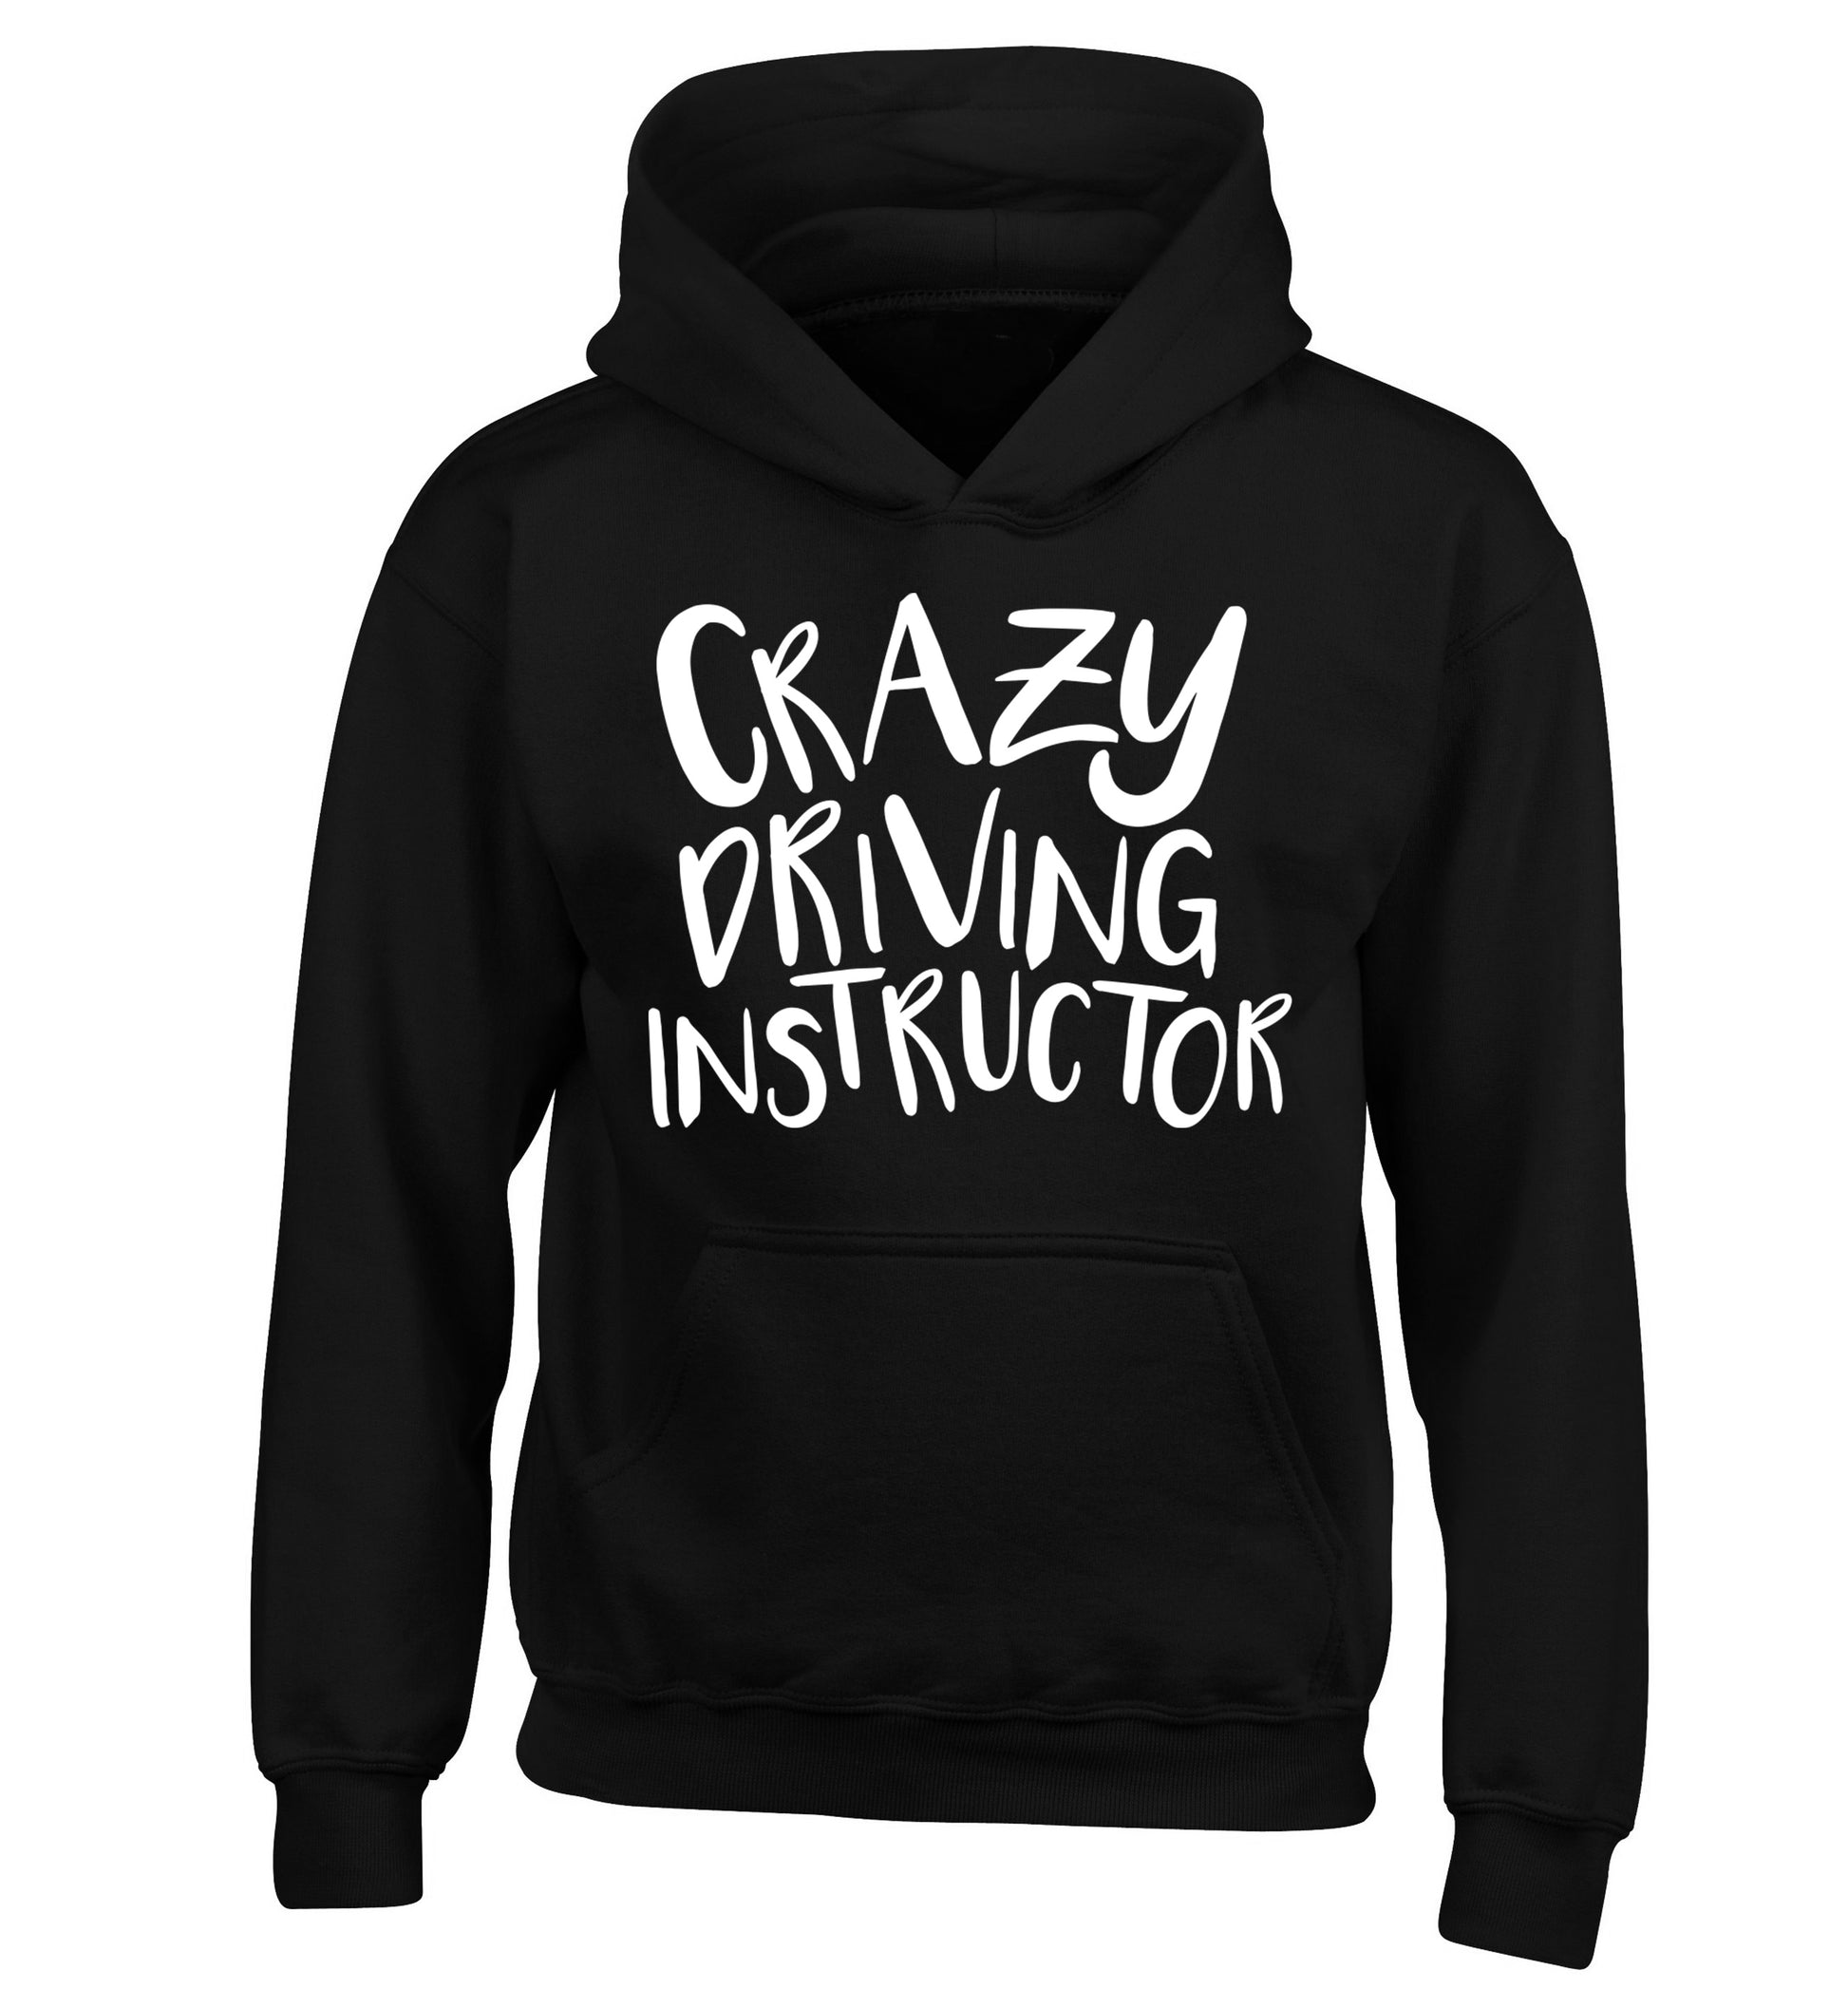 Crazy driving instructor children's black hoodie 12-13 Years